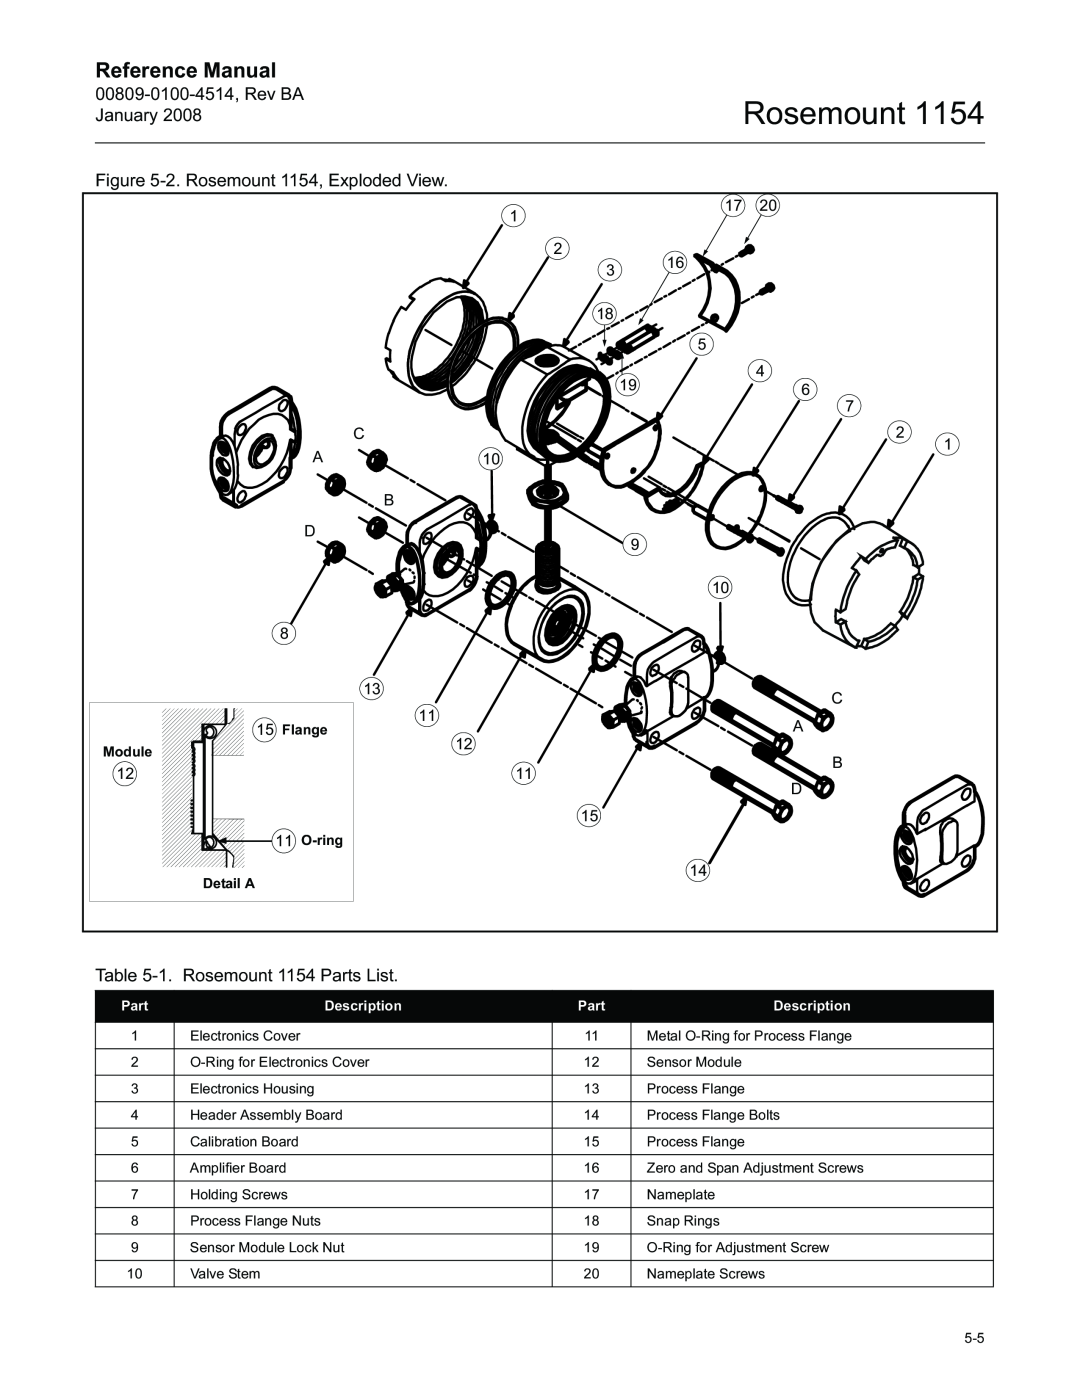 Emerson 1154, 00809-0100-4514 manual Rosemount, Reference Manual 